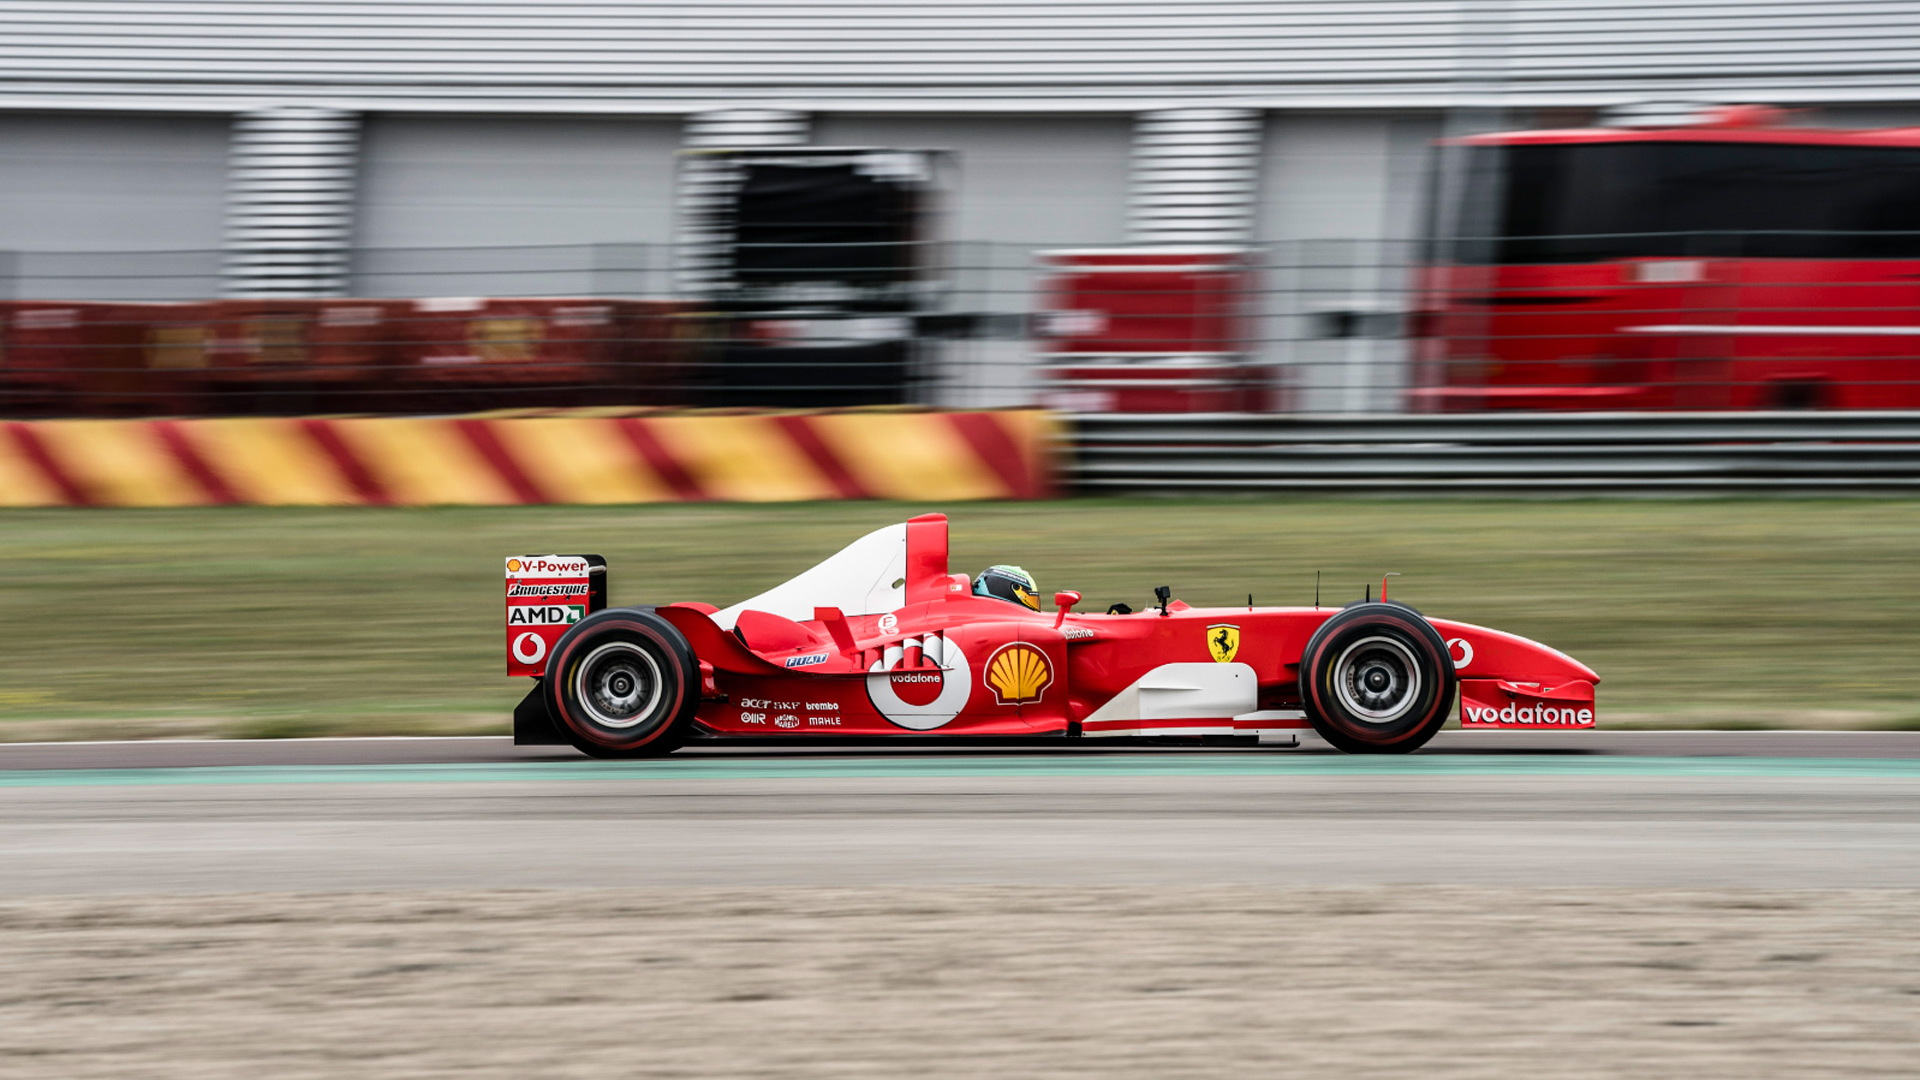 2003 Ferrari Formula 1 car raced by Michael Schumacher - Photo credit: RM Sotheby's